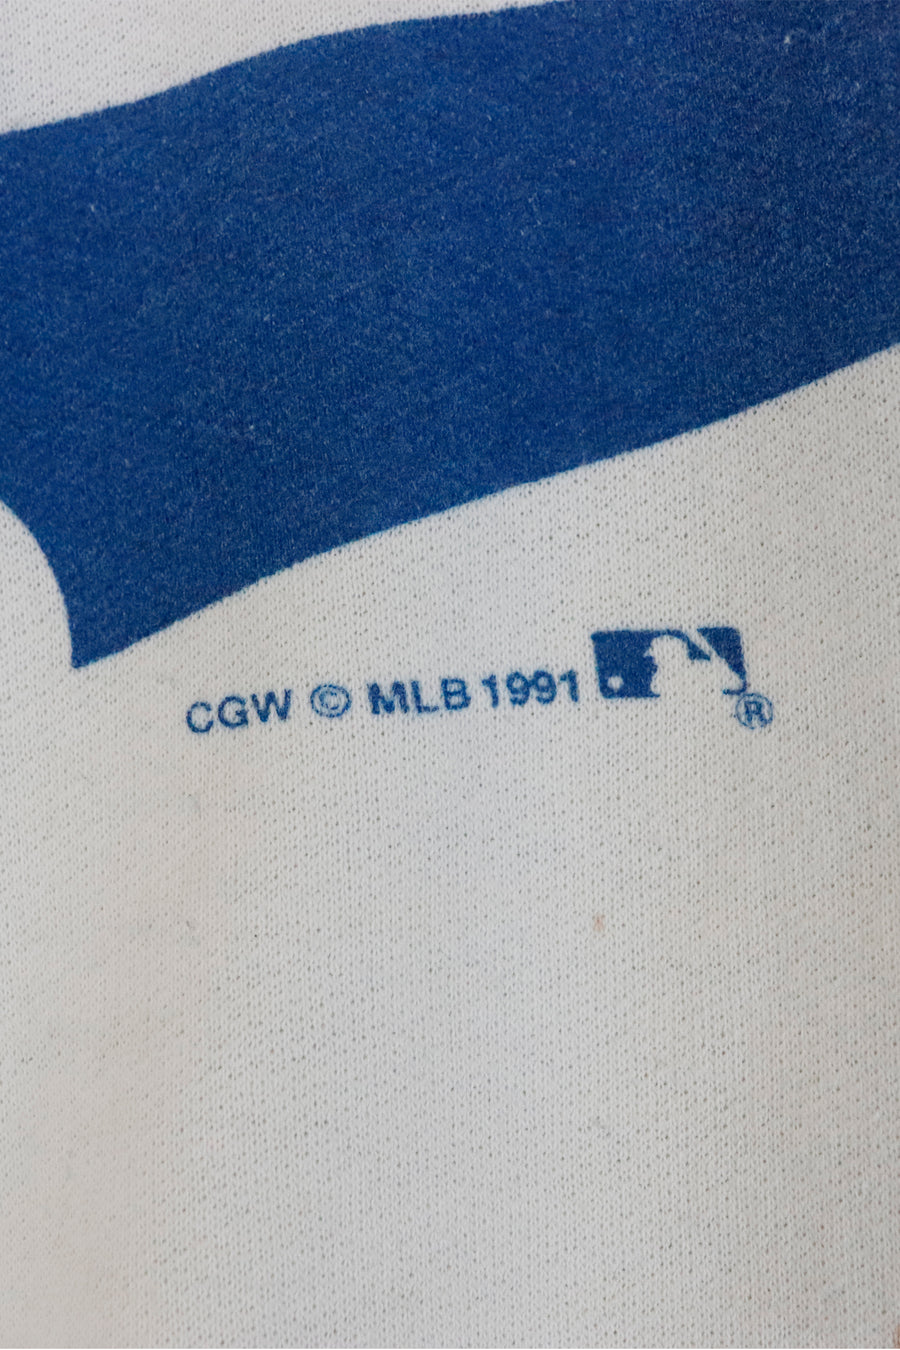 Vintage 1991 MLB Bluejays Labatt's Blue T Shirt Sz 2XL